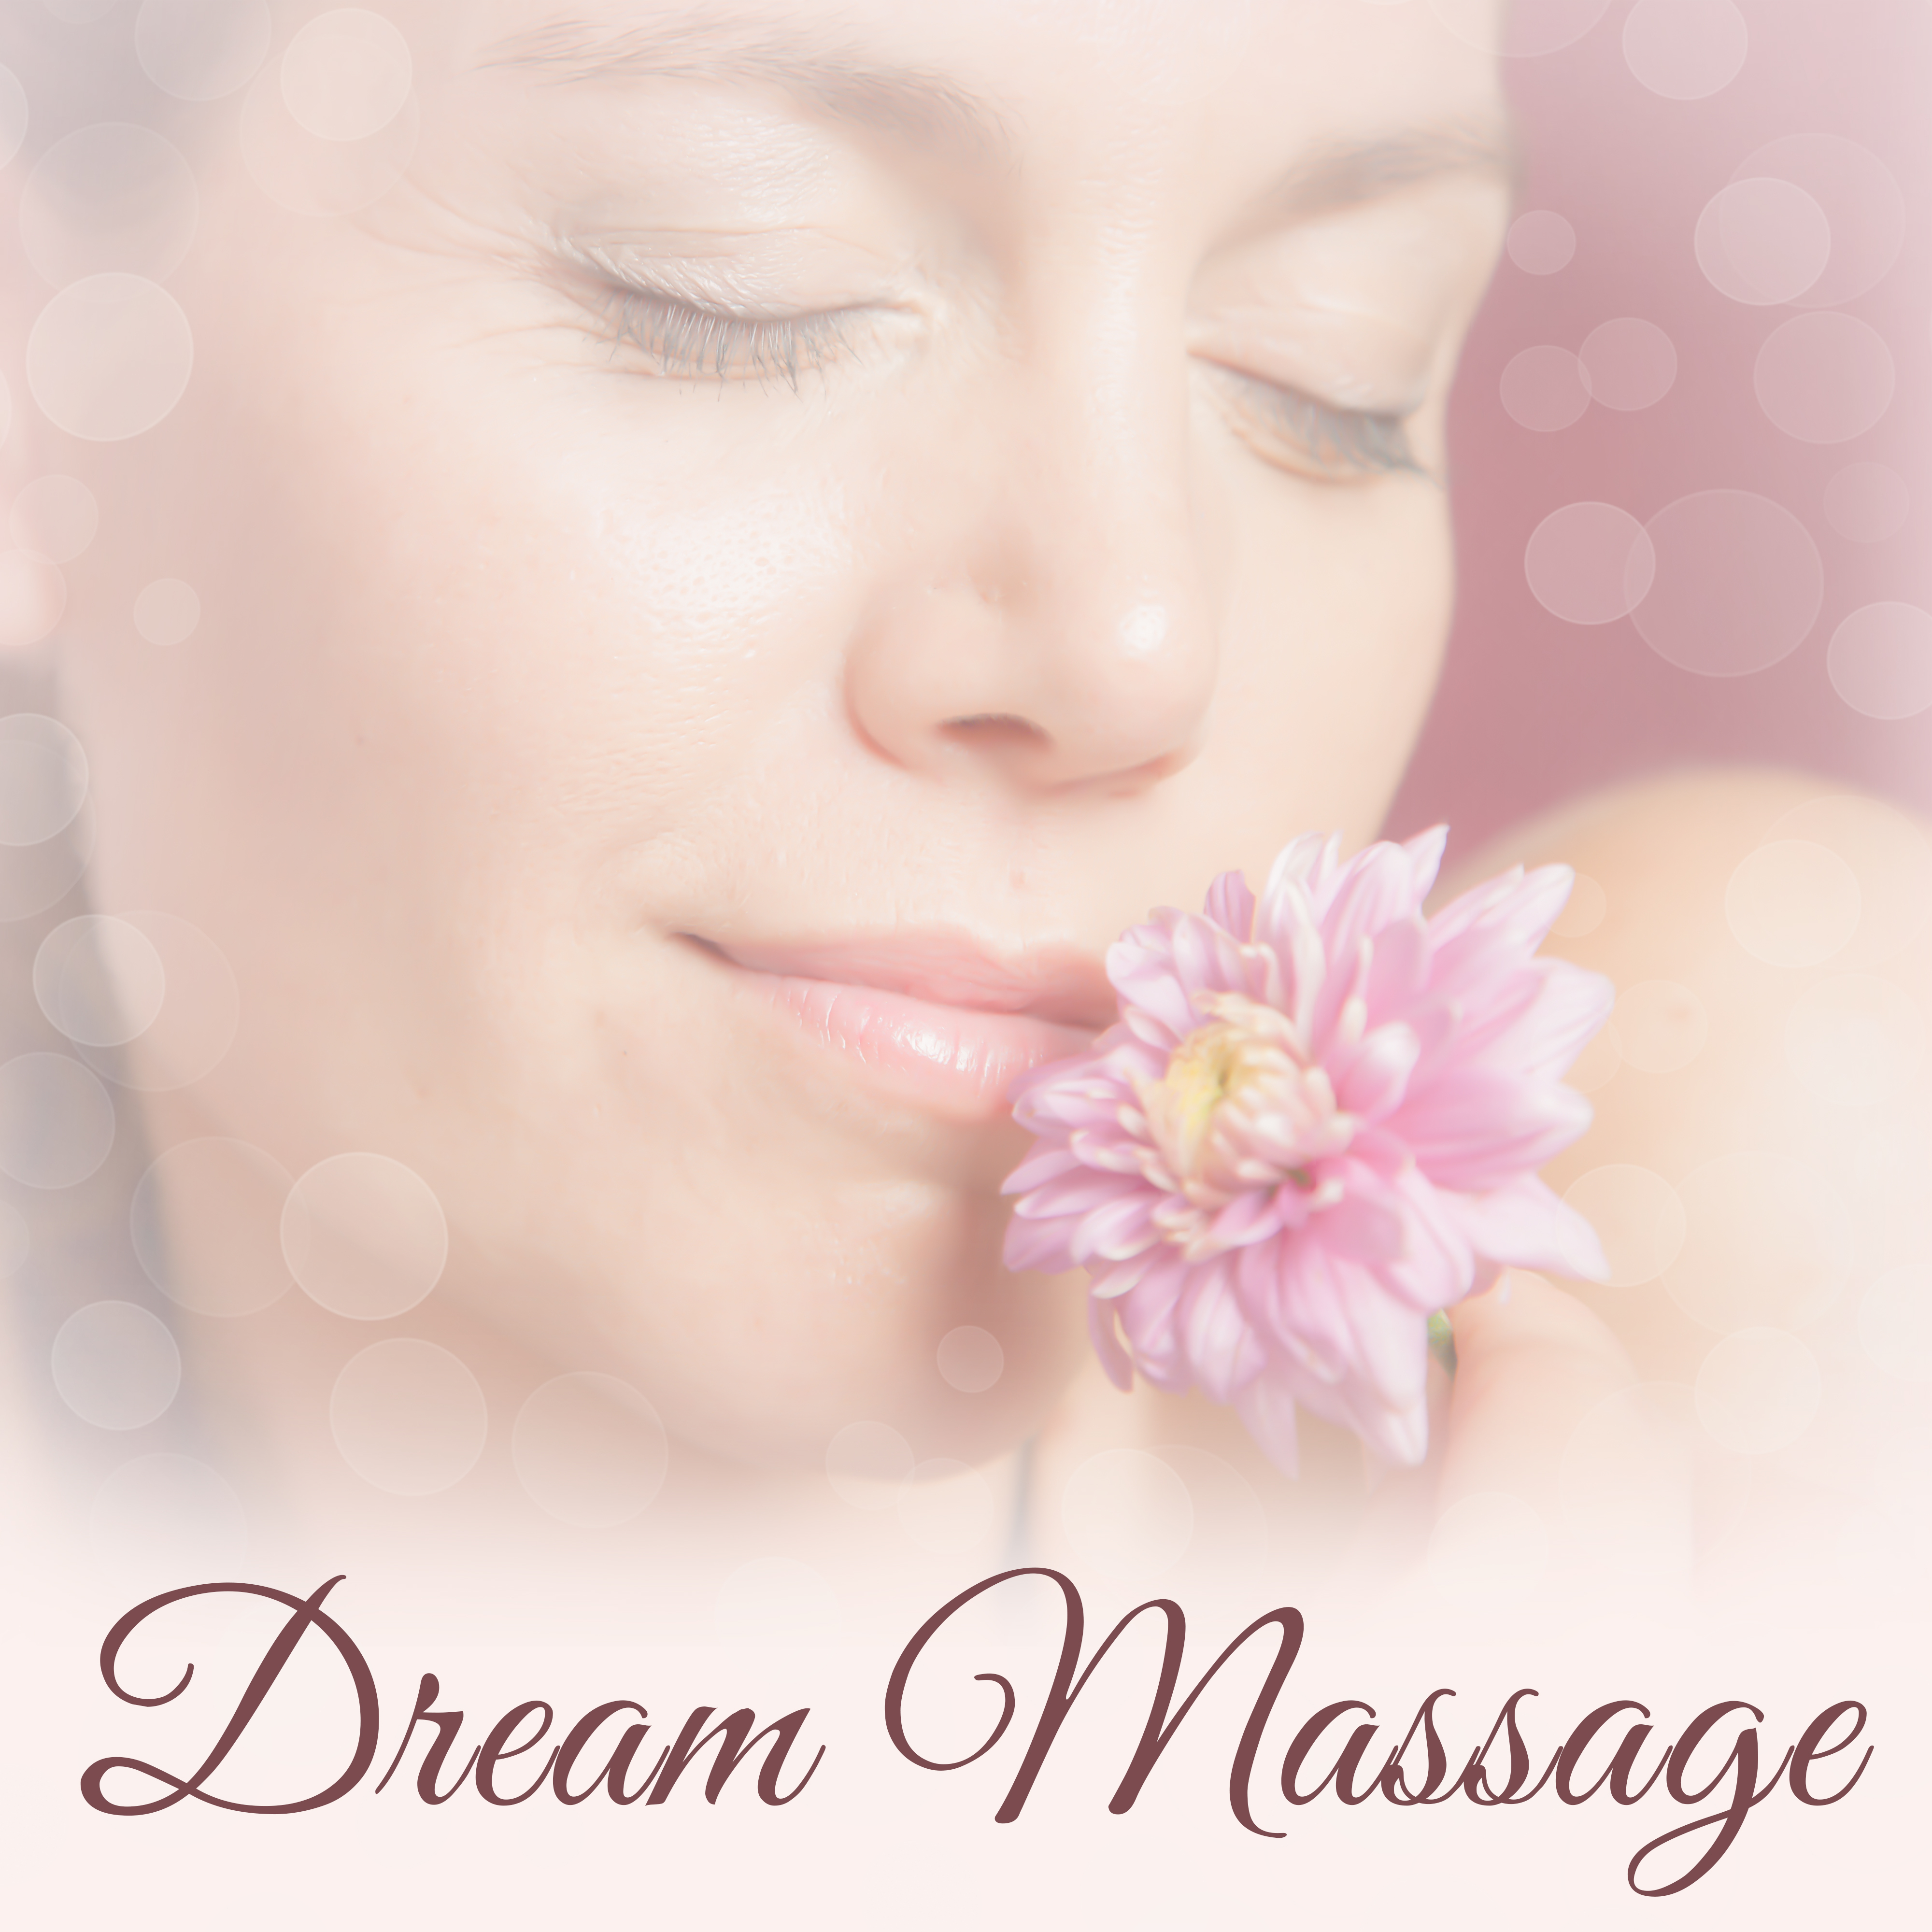 Dream Massage – Healing Nature Sounds for Massage, Spa Therapy, Wellness, Relaxation, Zen, Meditation